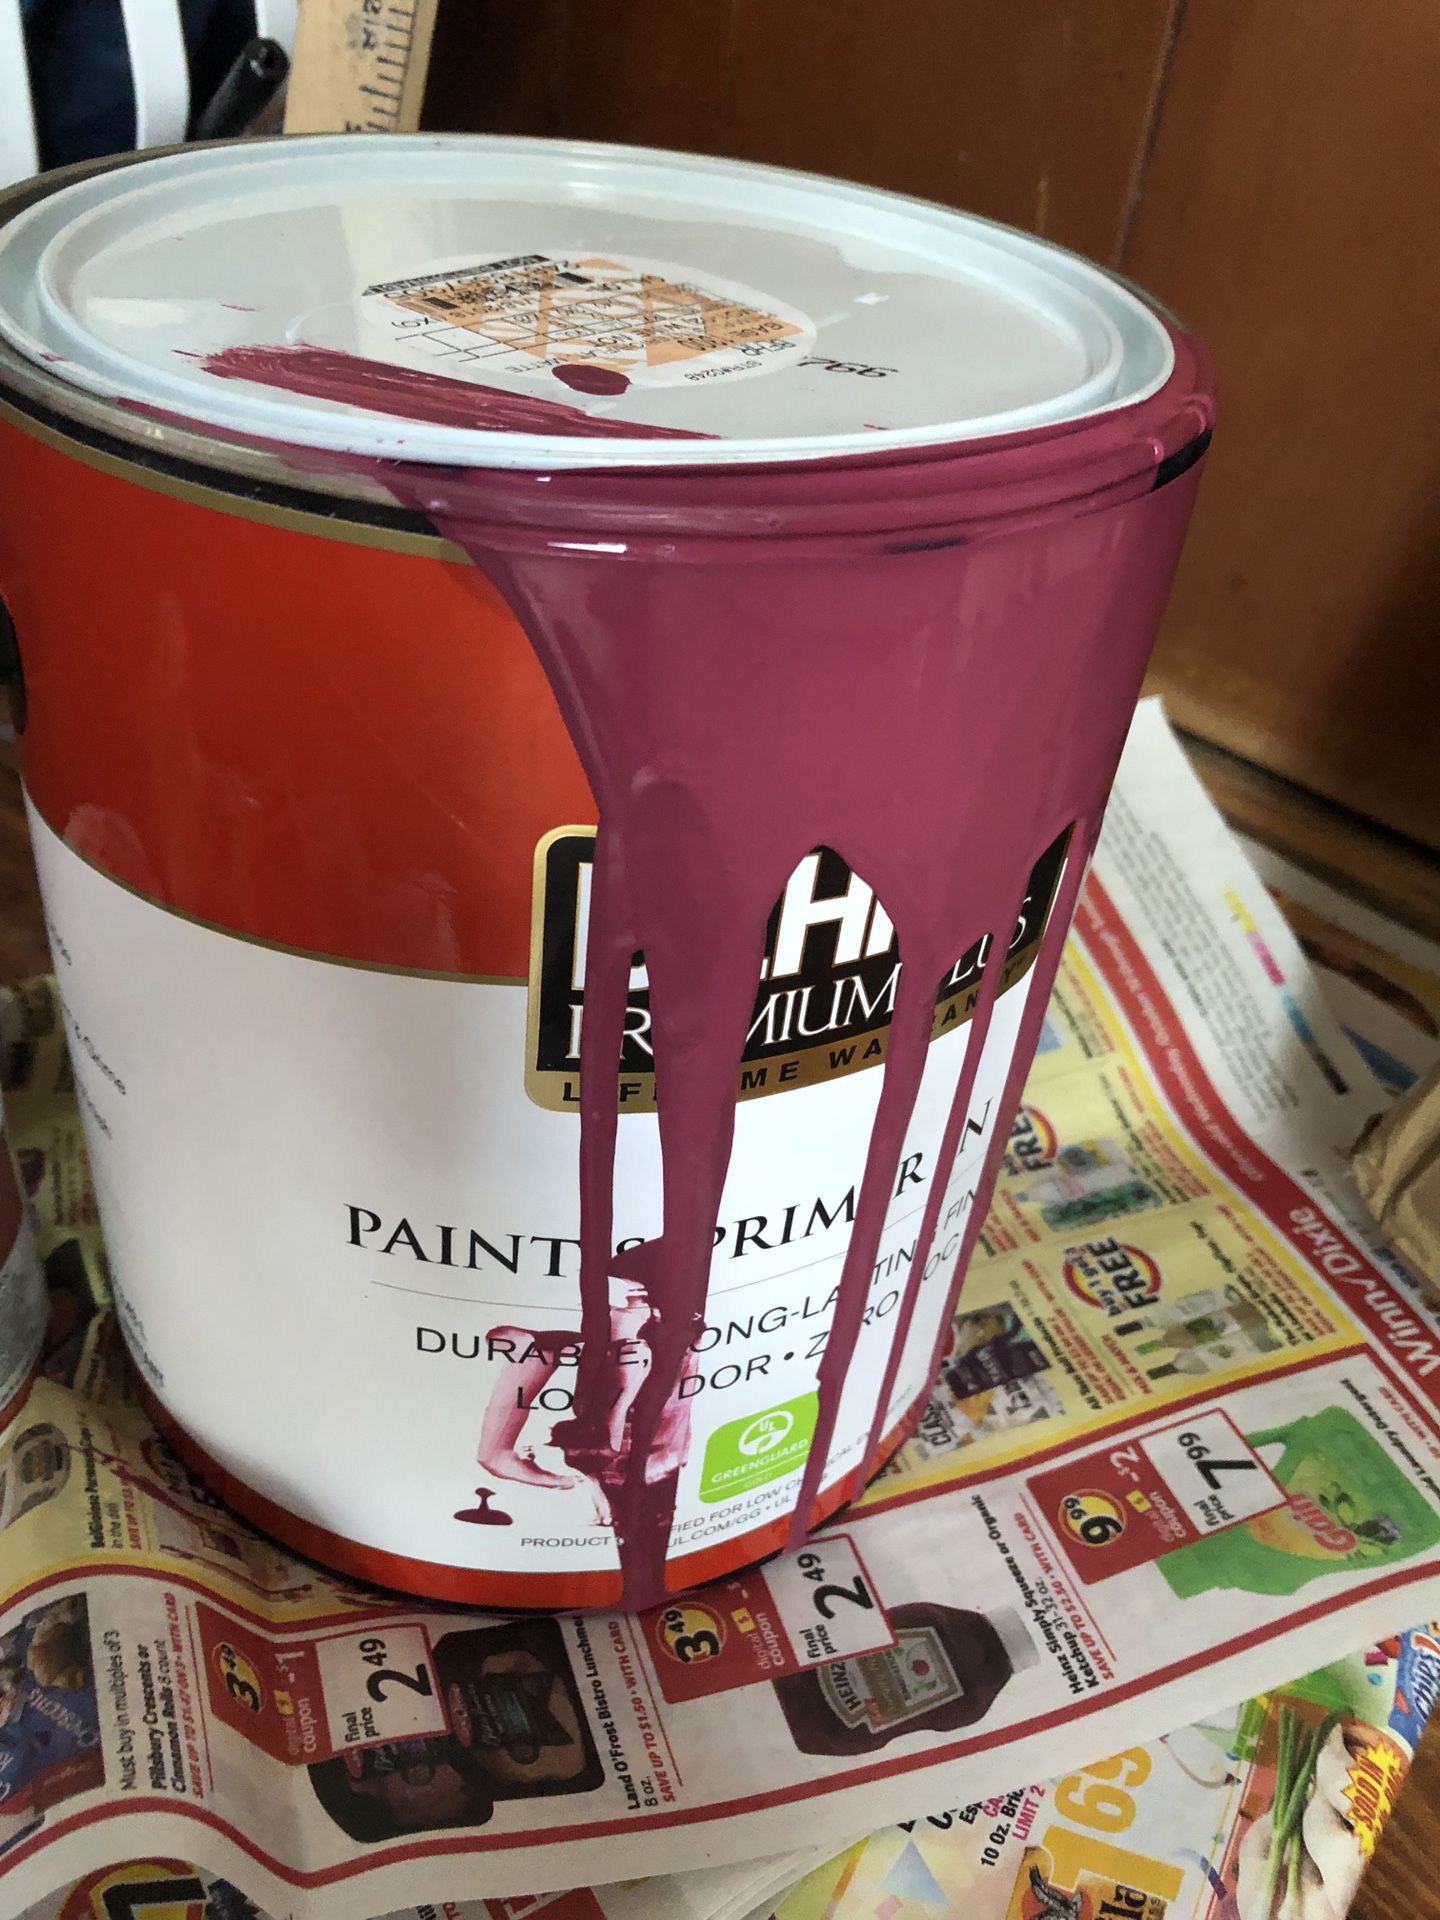 “Wine Not” Gallon of paint